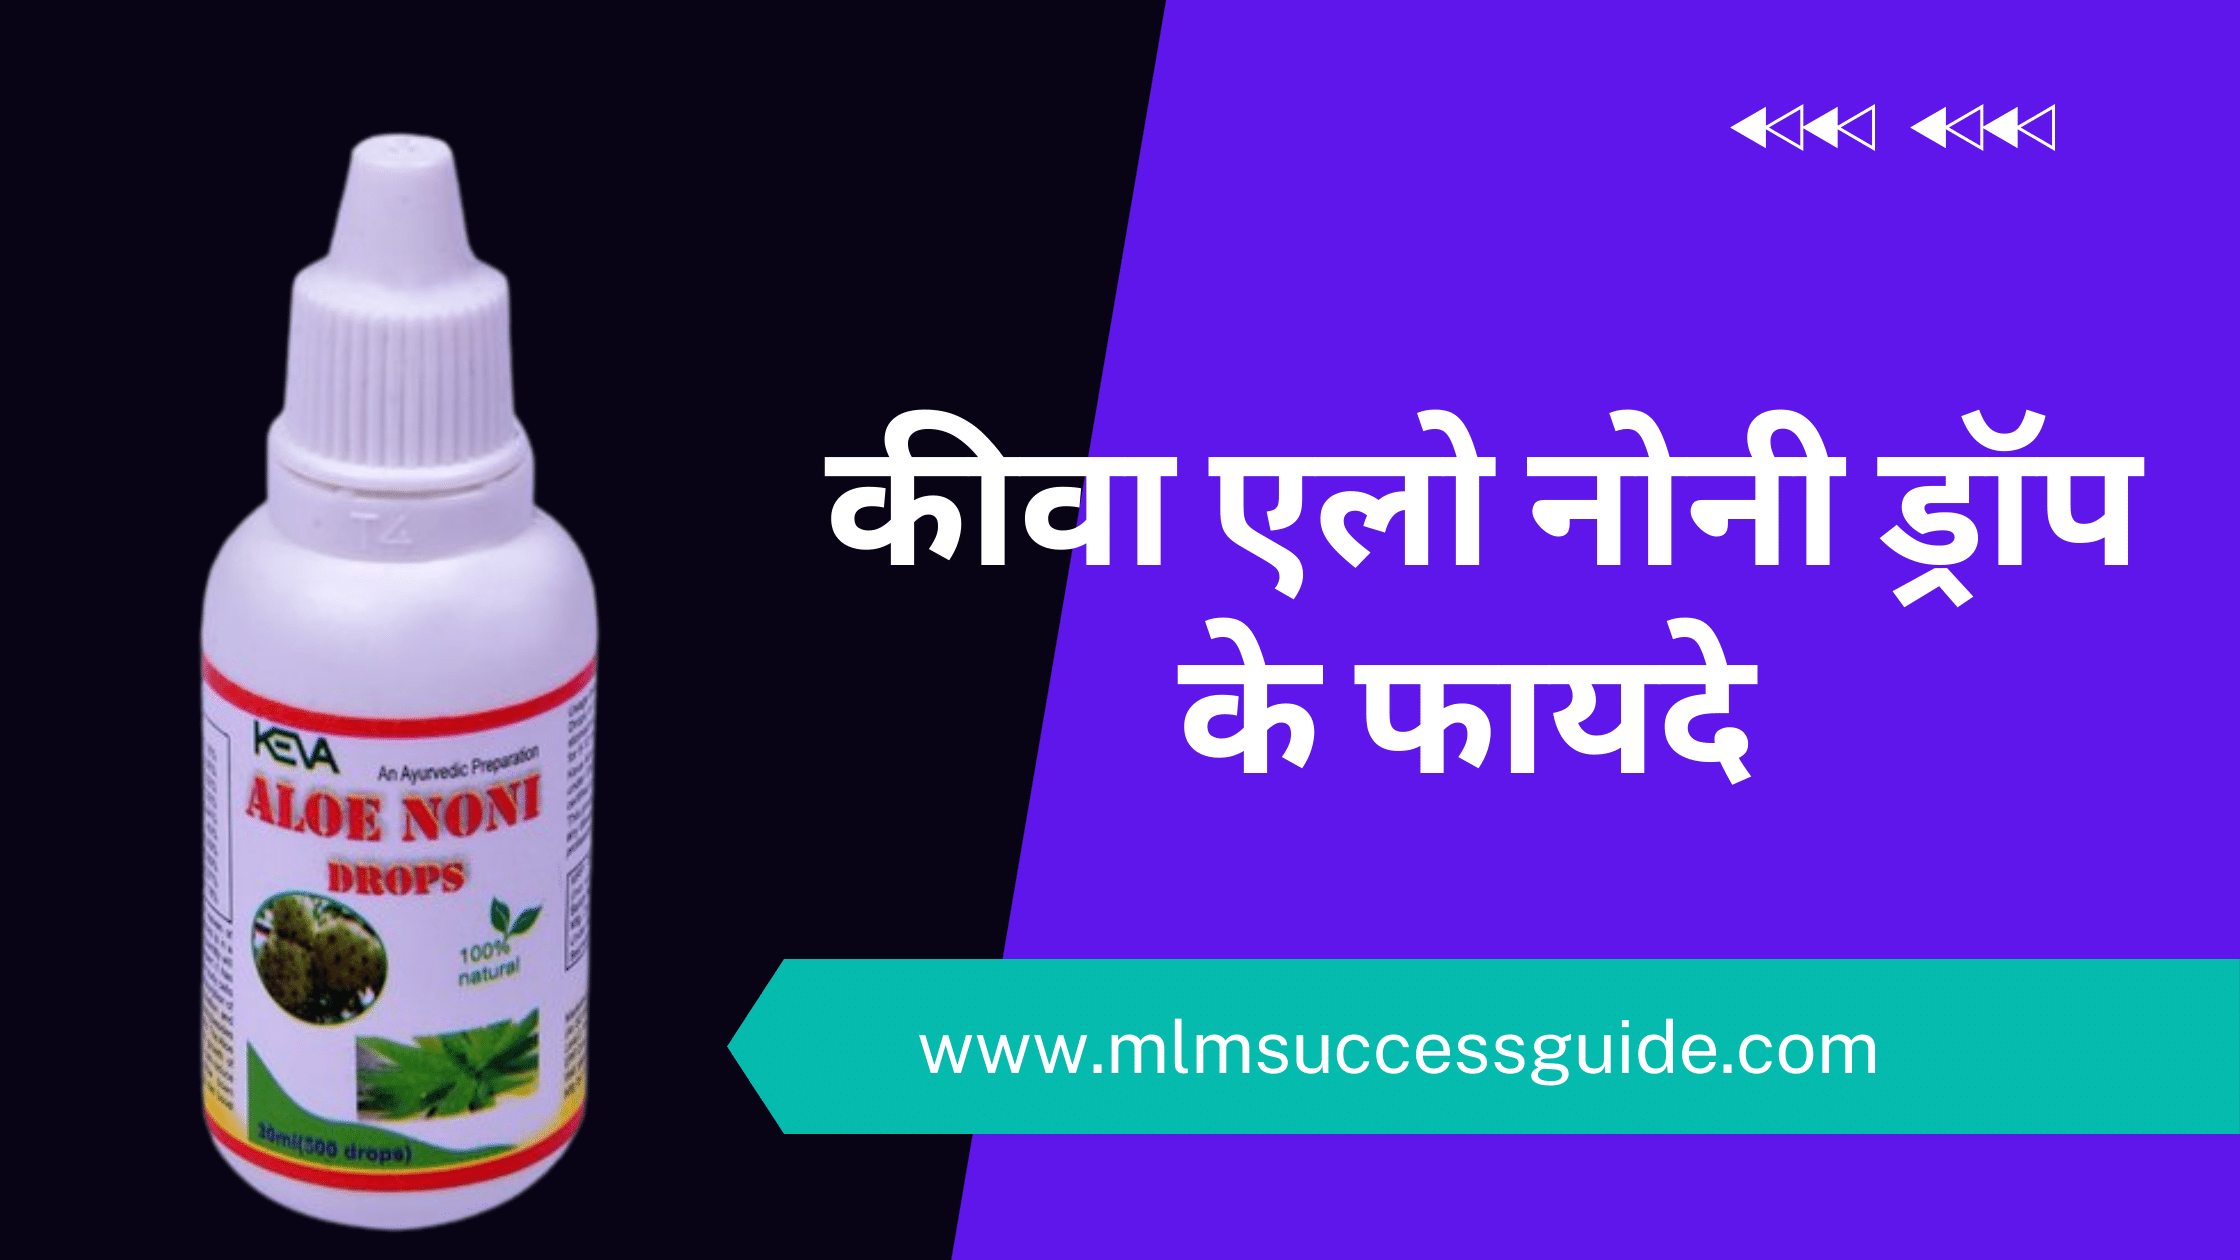 Keva Aloe Noni Drop Benefits In Hindi - Mlm Success Guide